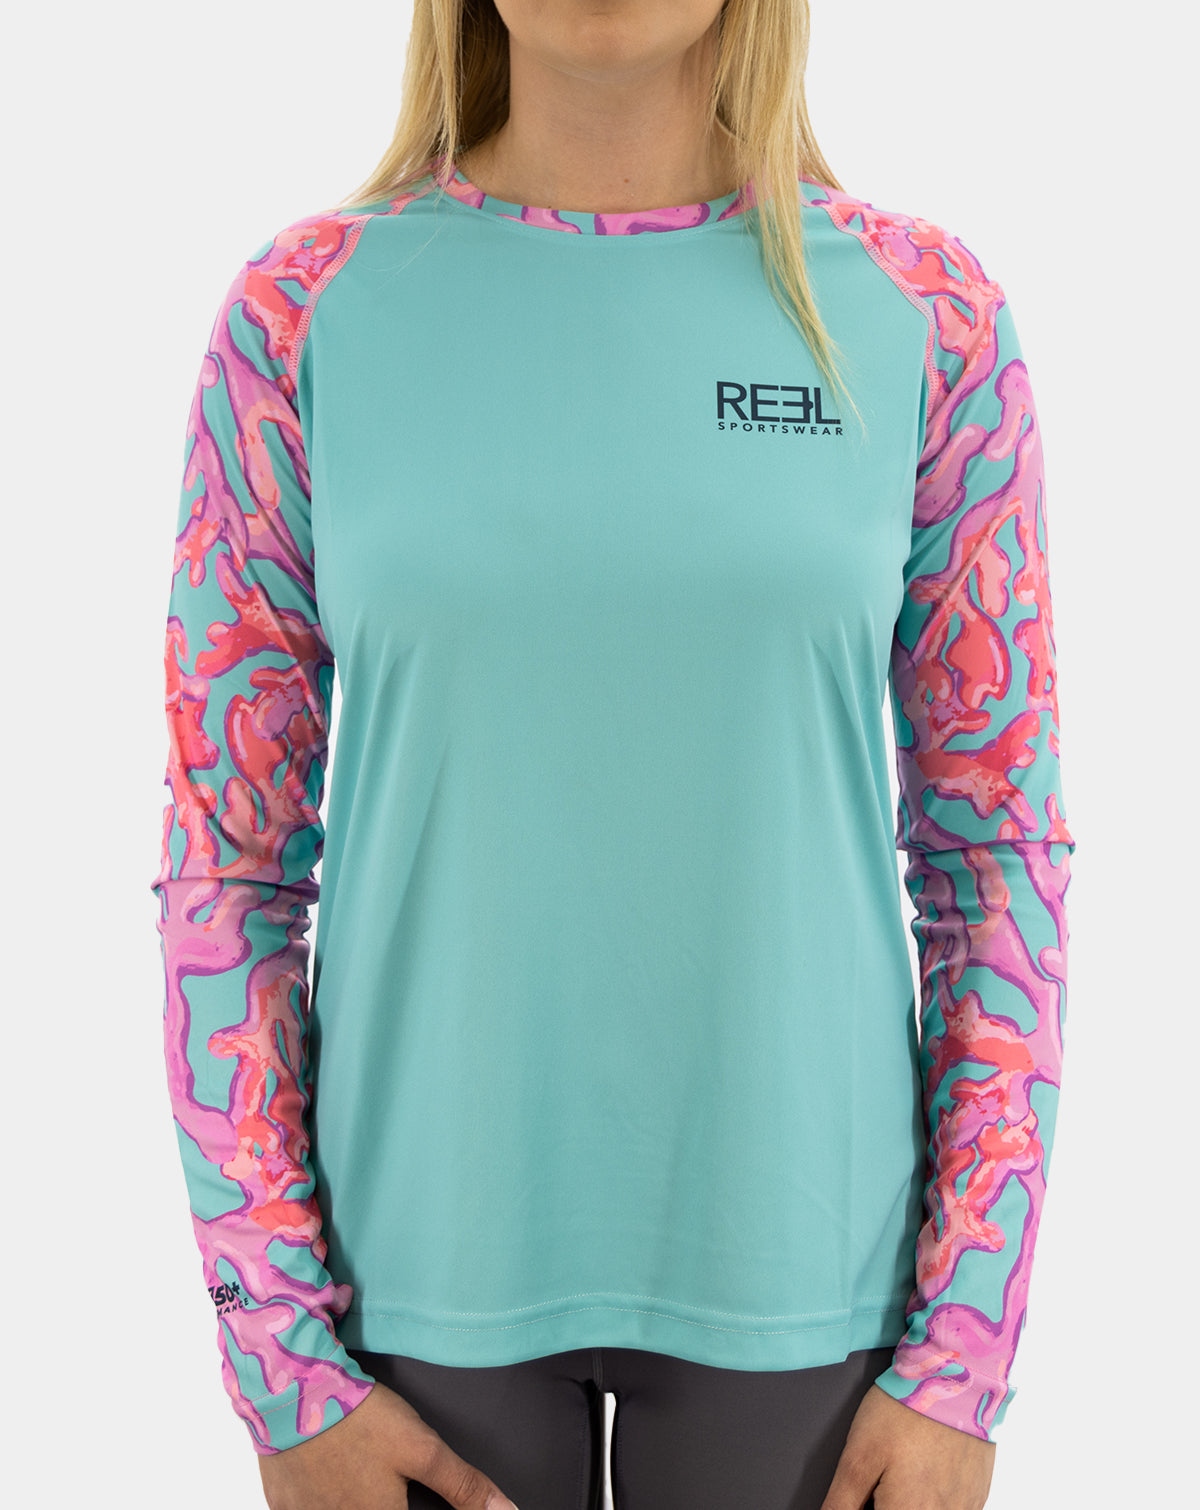 Kai women's long sleeve fishing shirt, Reel Sportswear